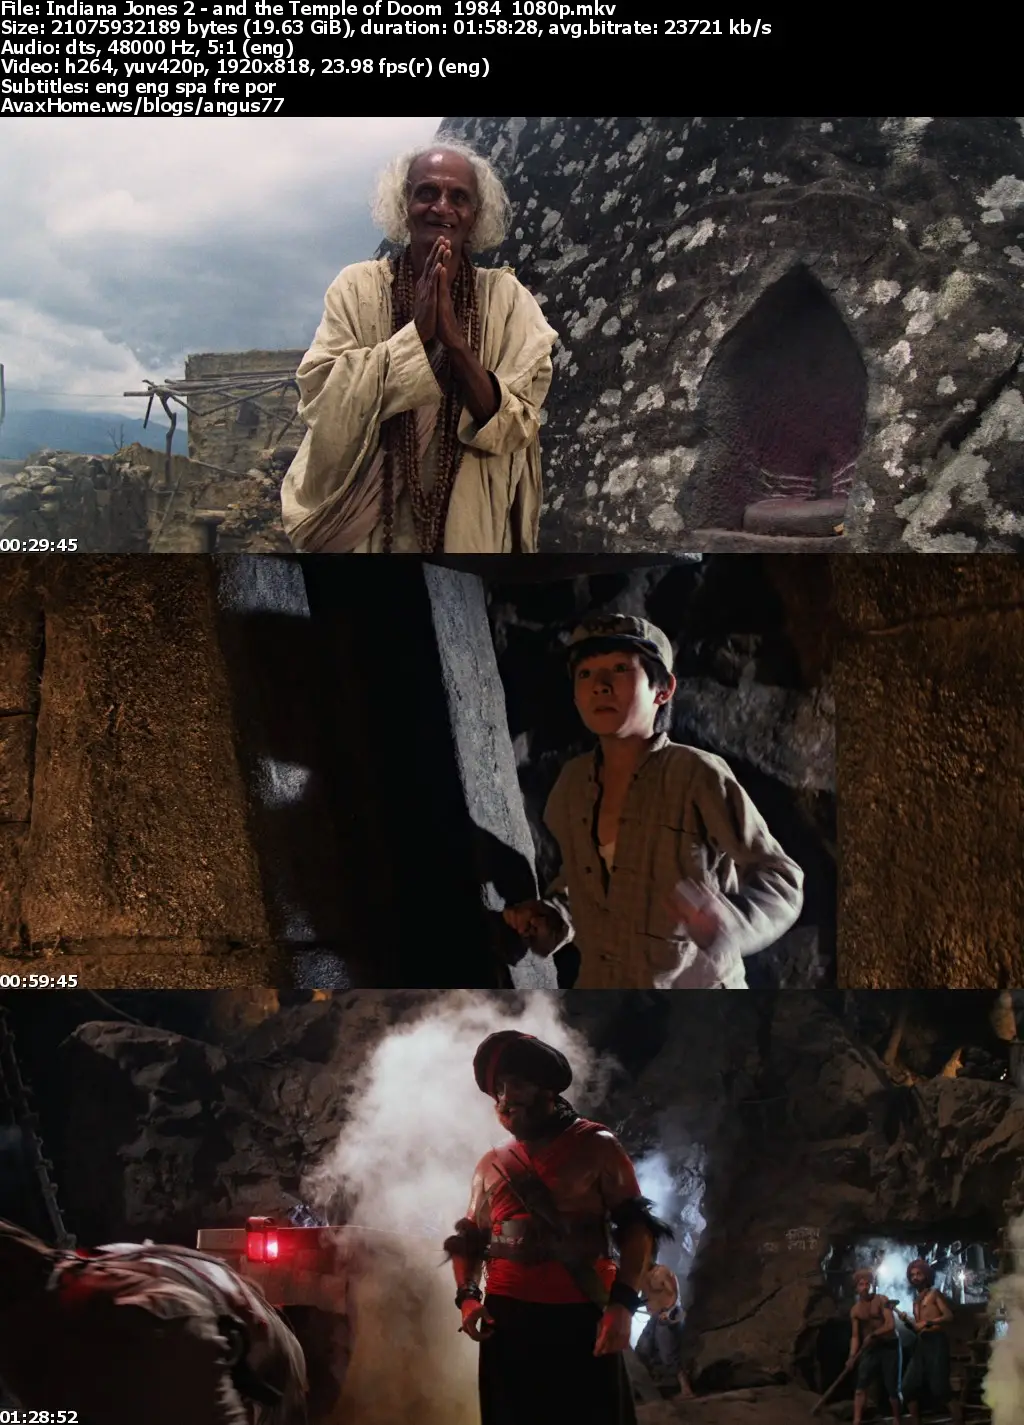 INDIANA JONES (1981-2008) Trailer #1 - Harrison Ford 